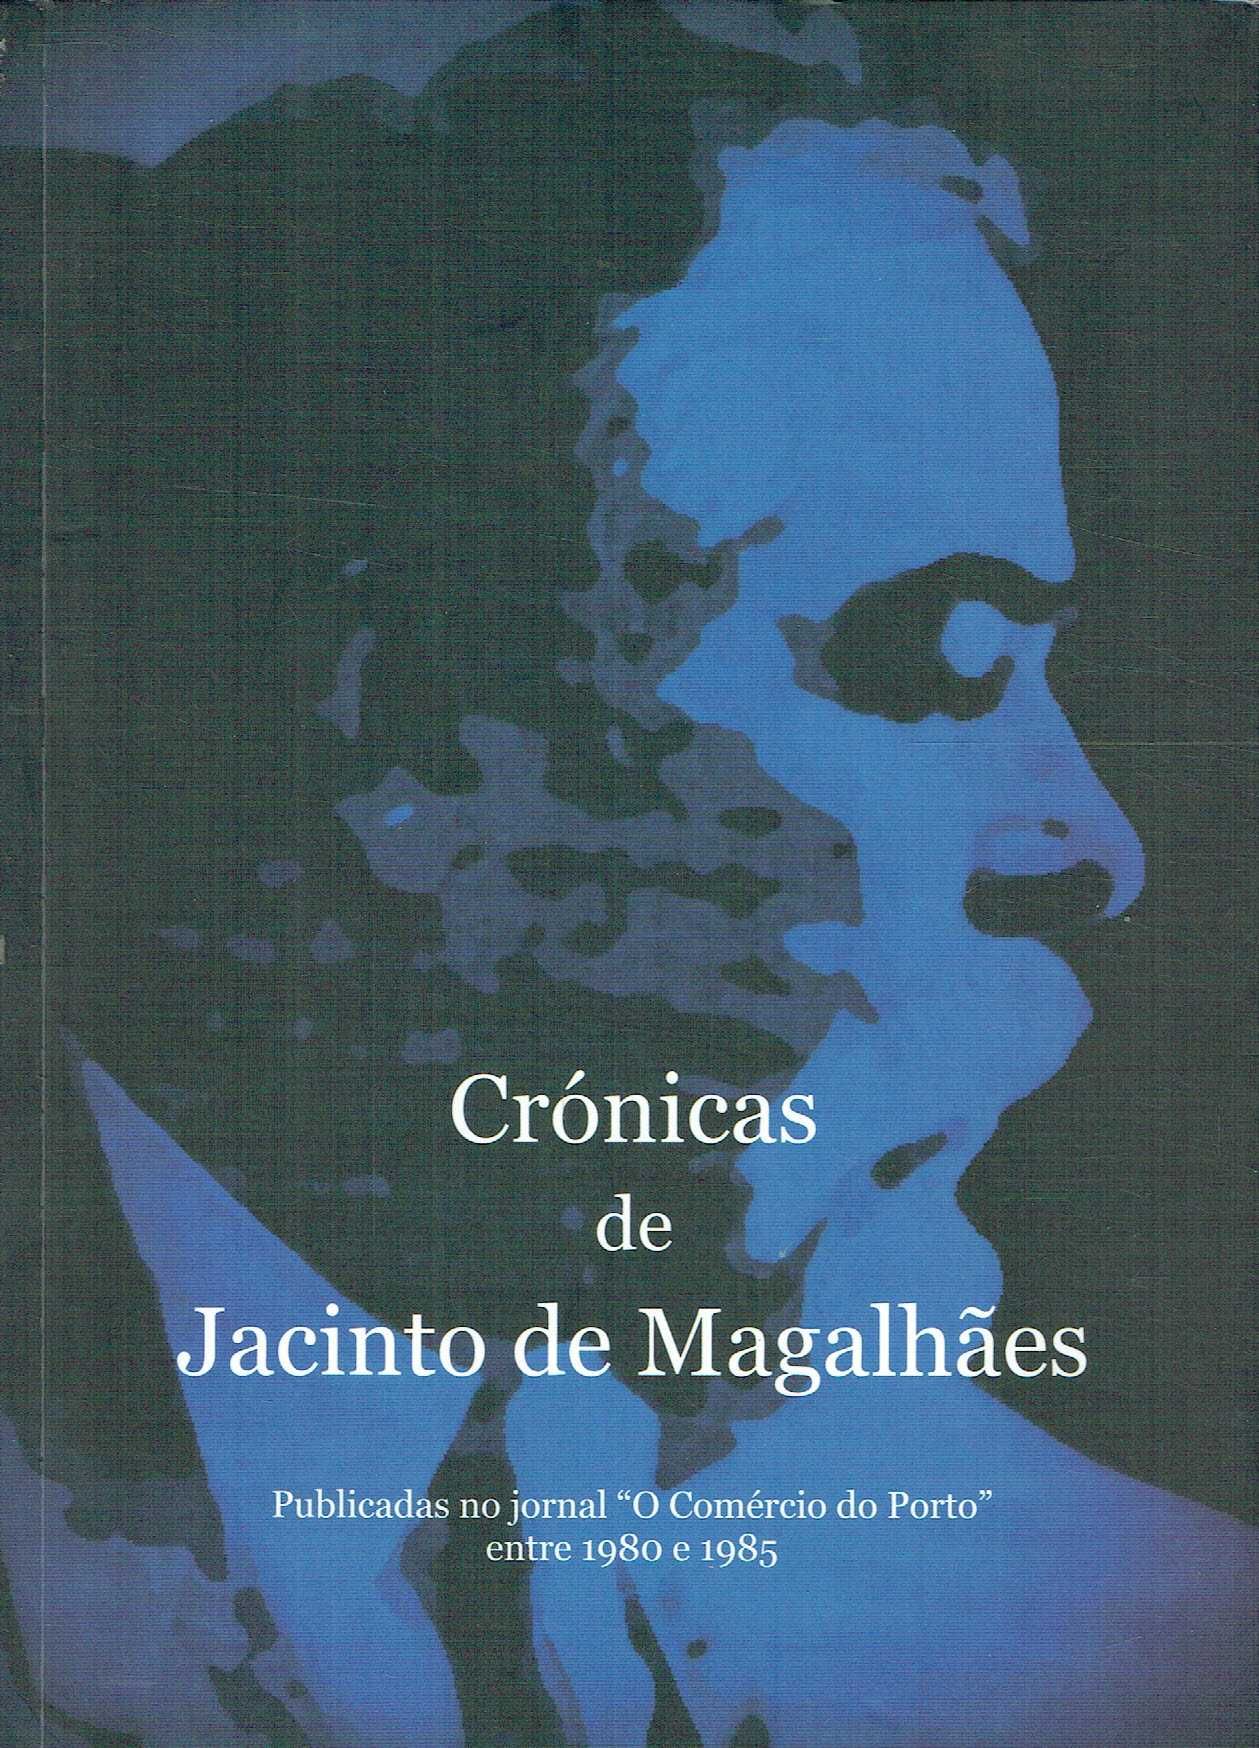 15248

Crónicas de Jacinto de Magalhães